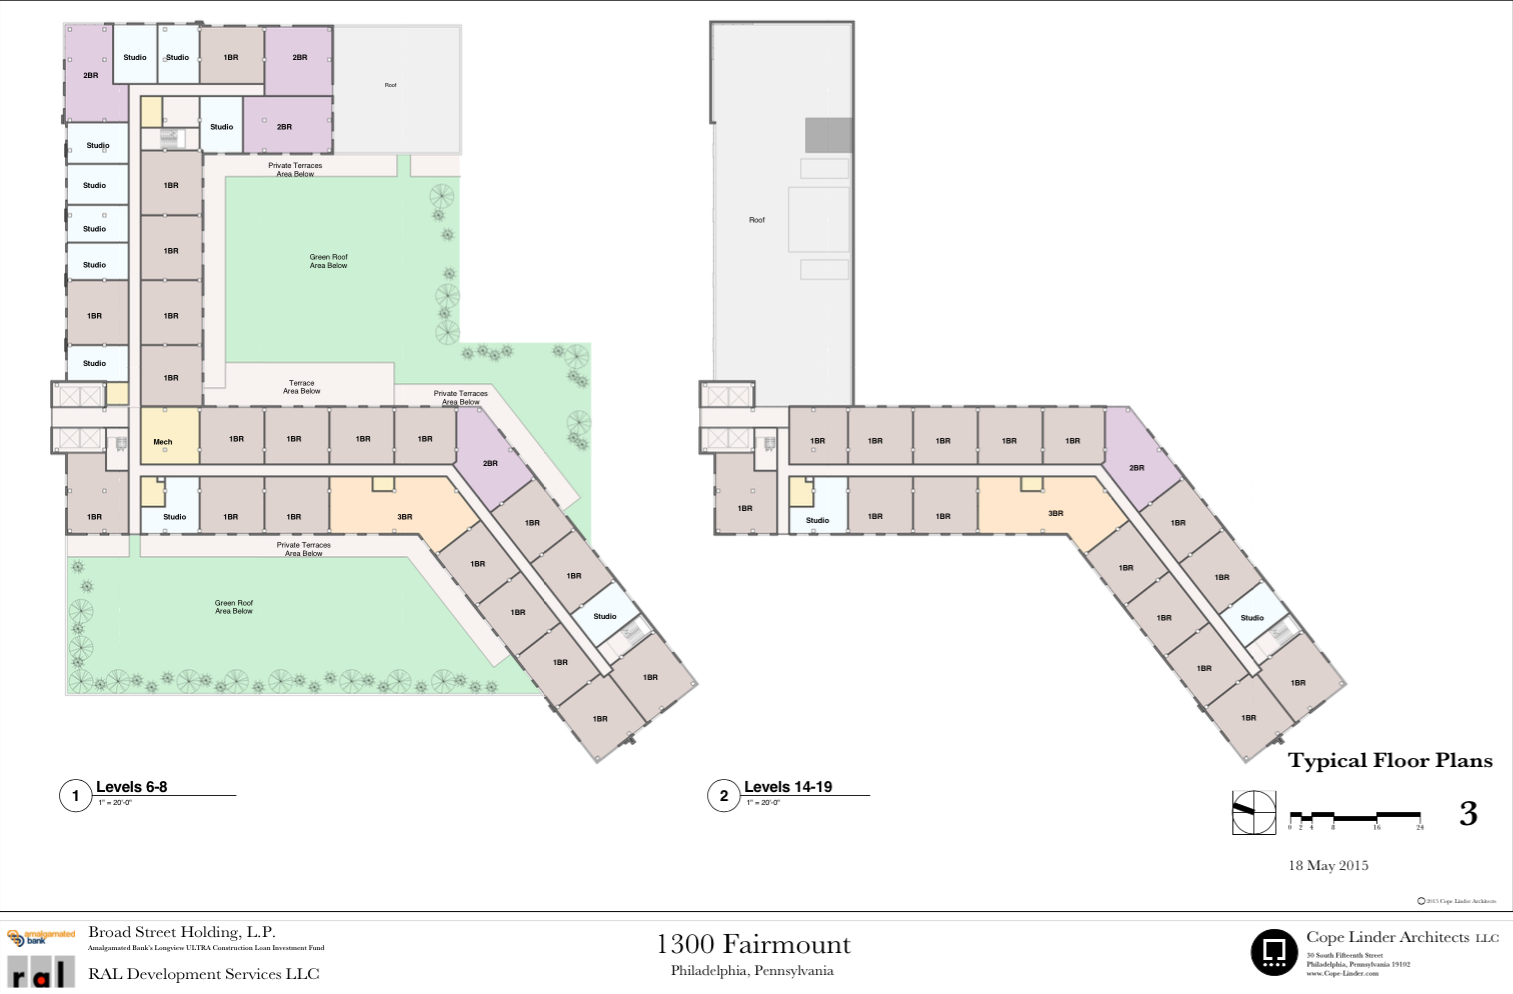 1300 Fairmount Site Plan | Cope Linder Architects